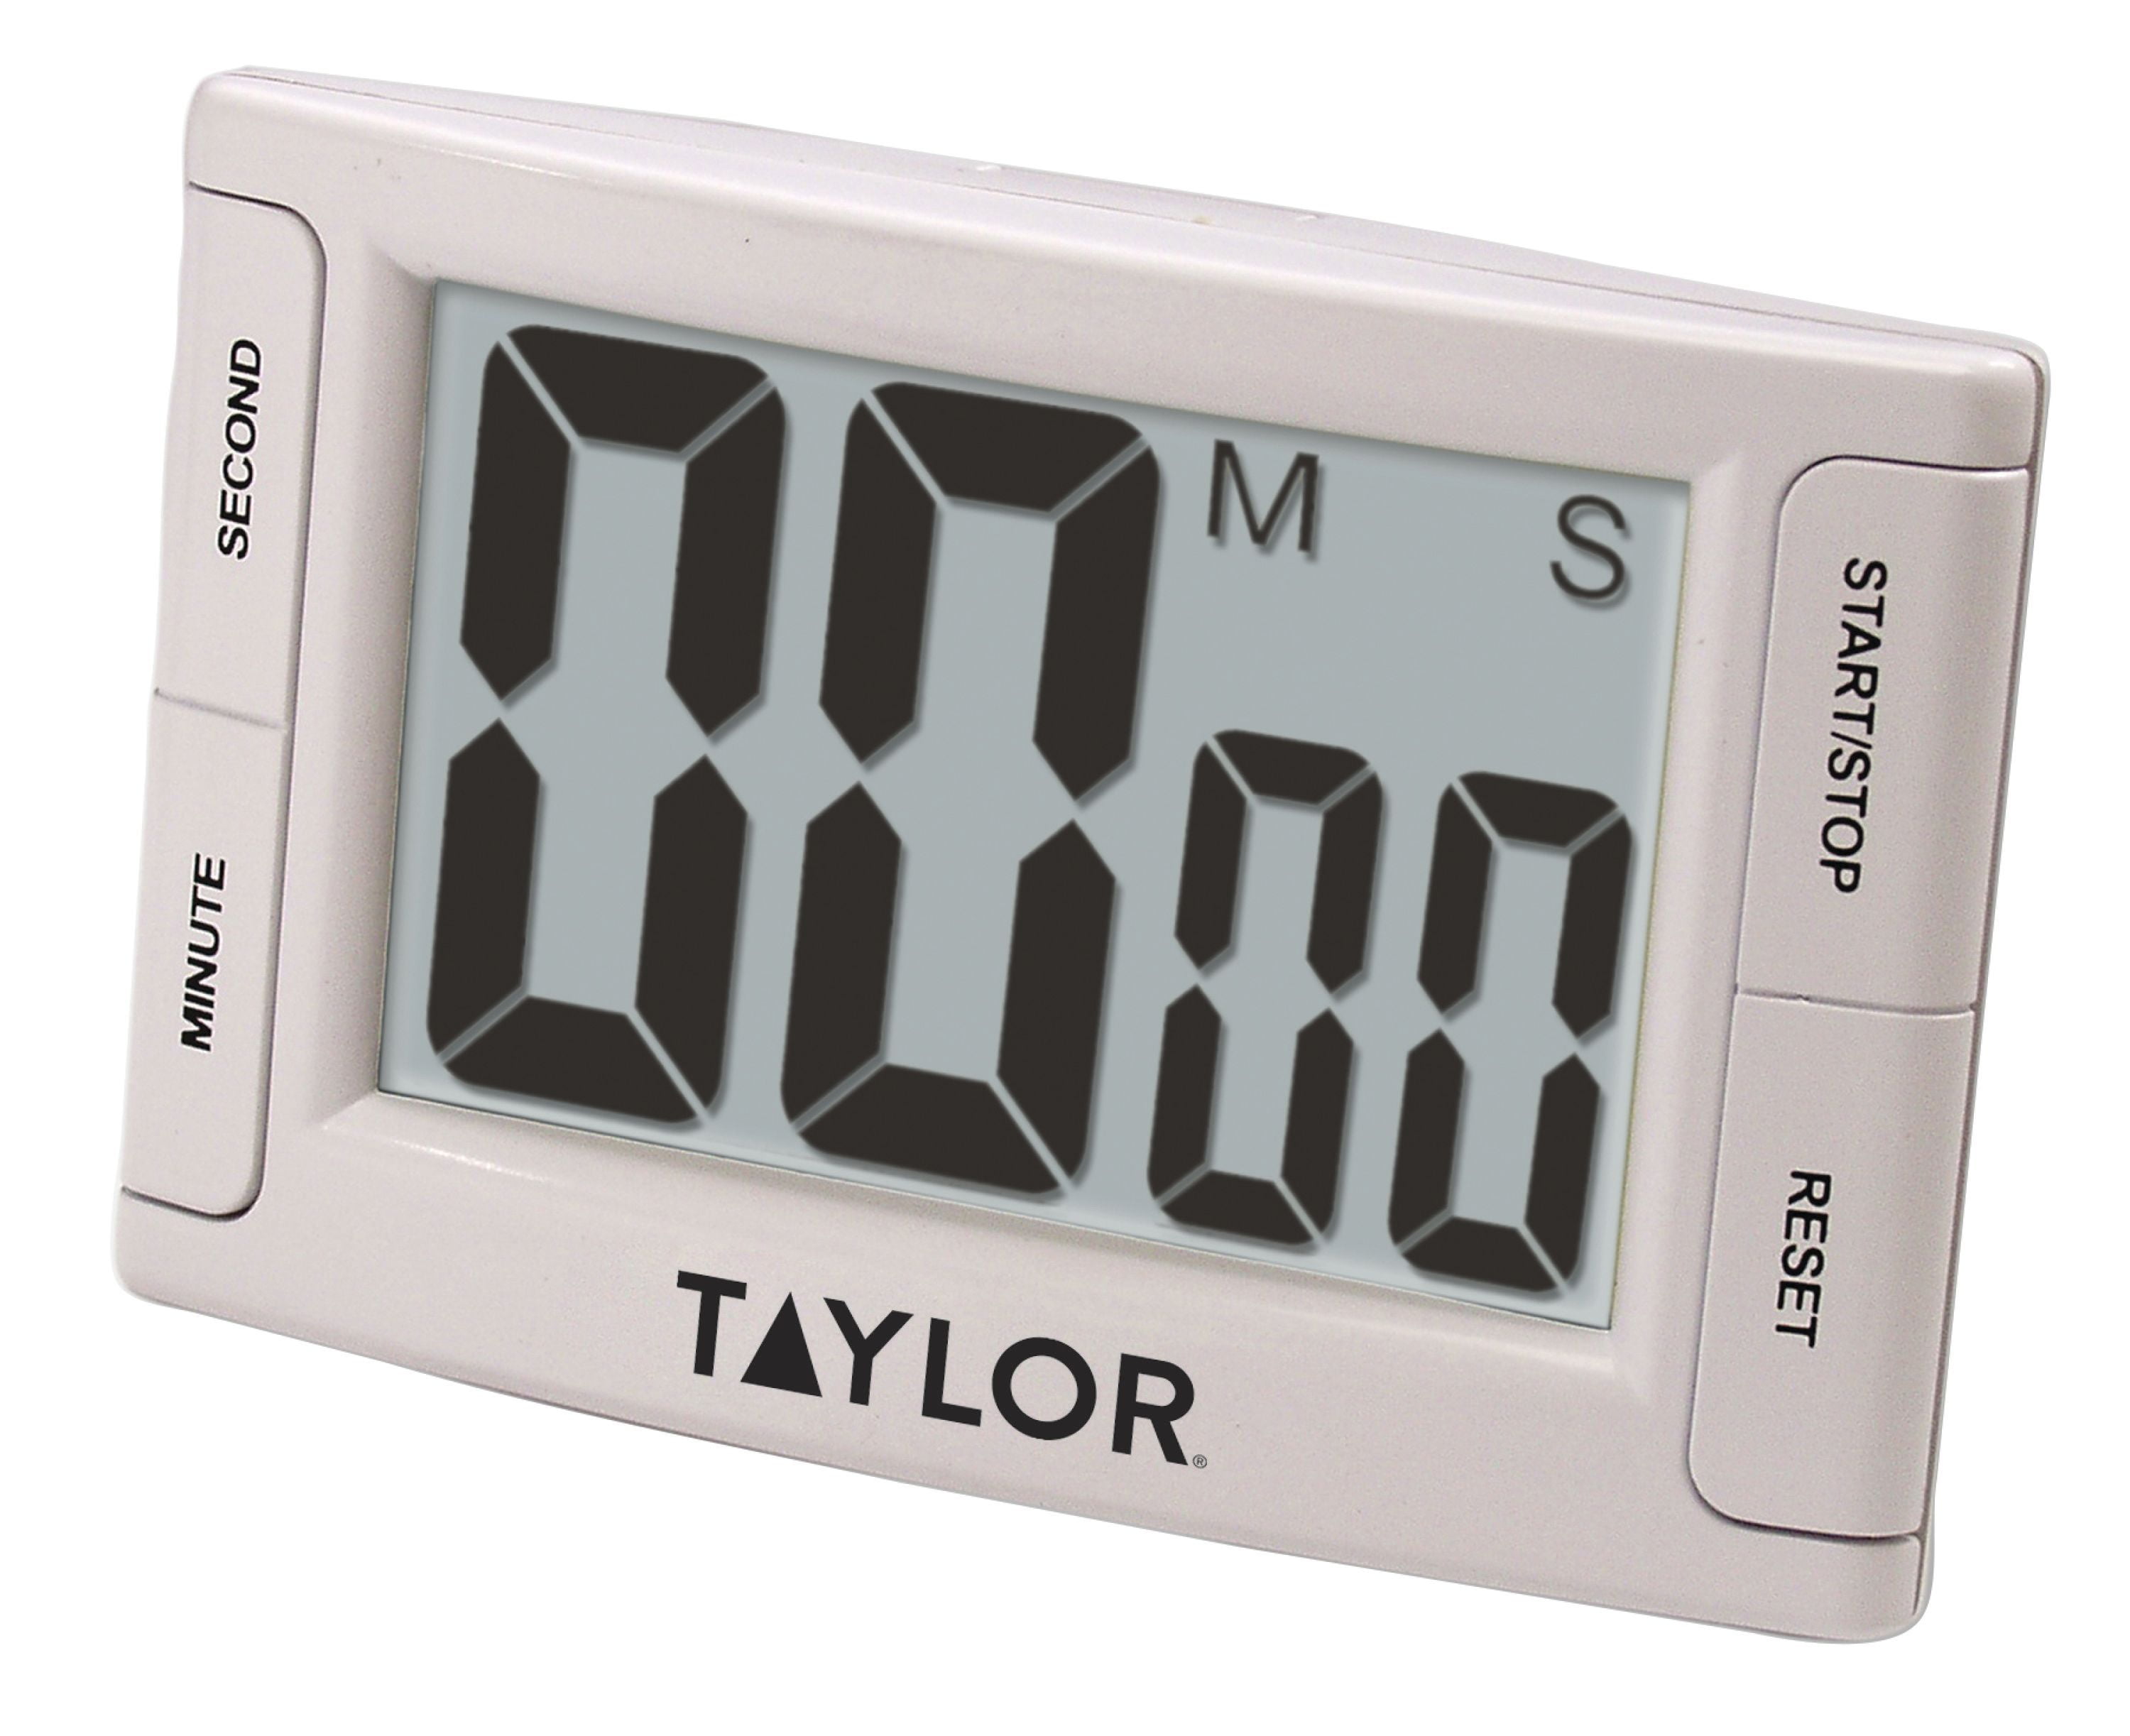 Taylor - Ultra Thin Digital Kitchen Timer w/ Clock - Silver S846-21